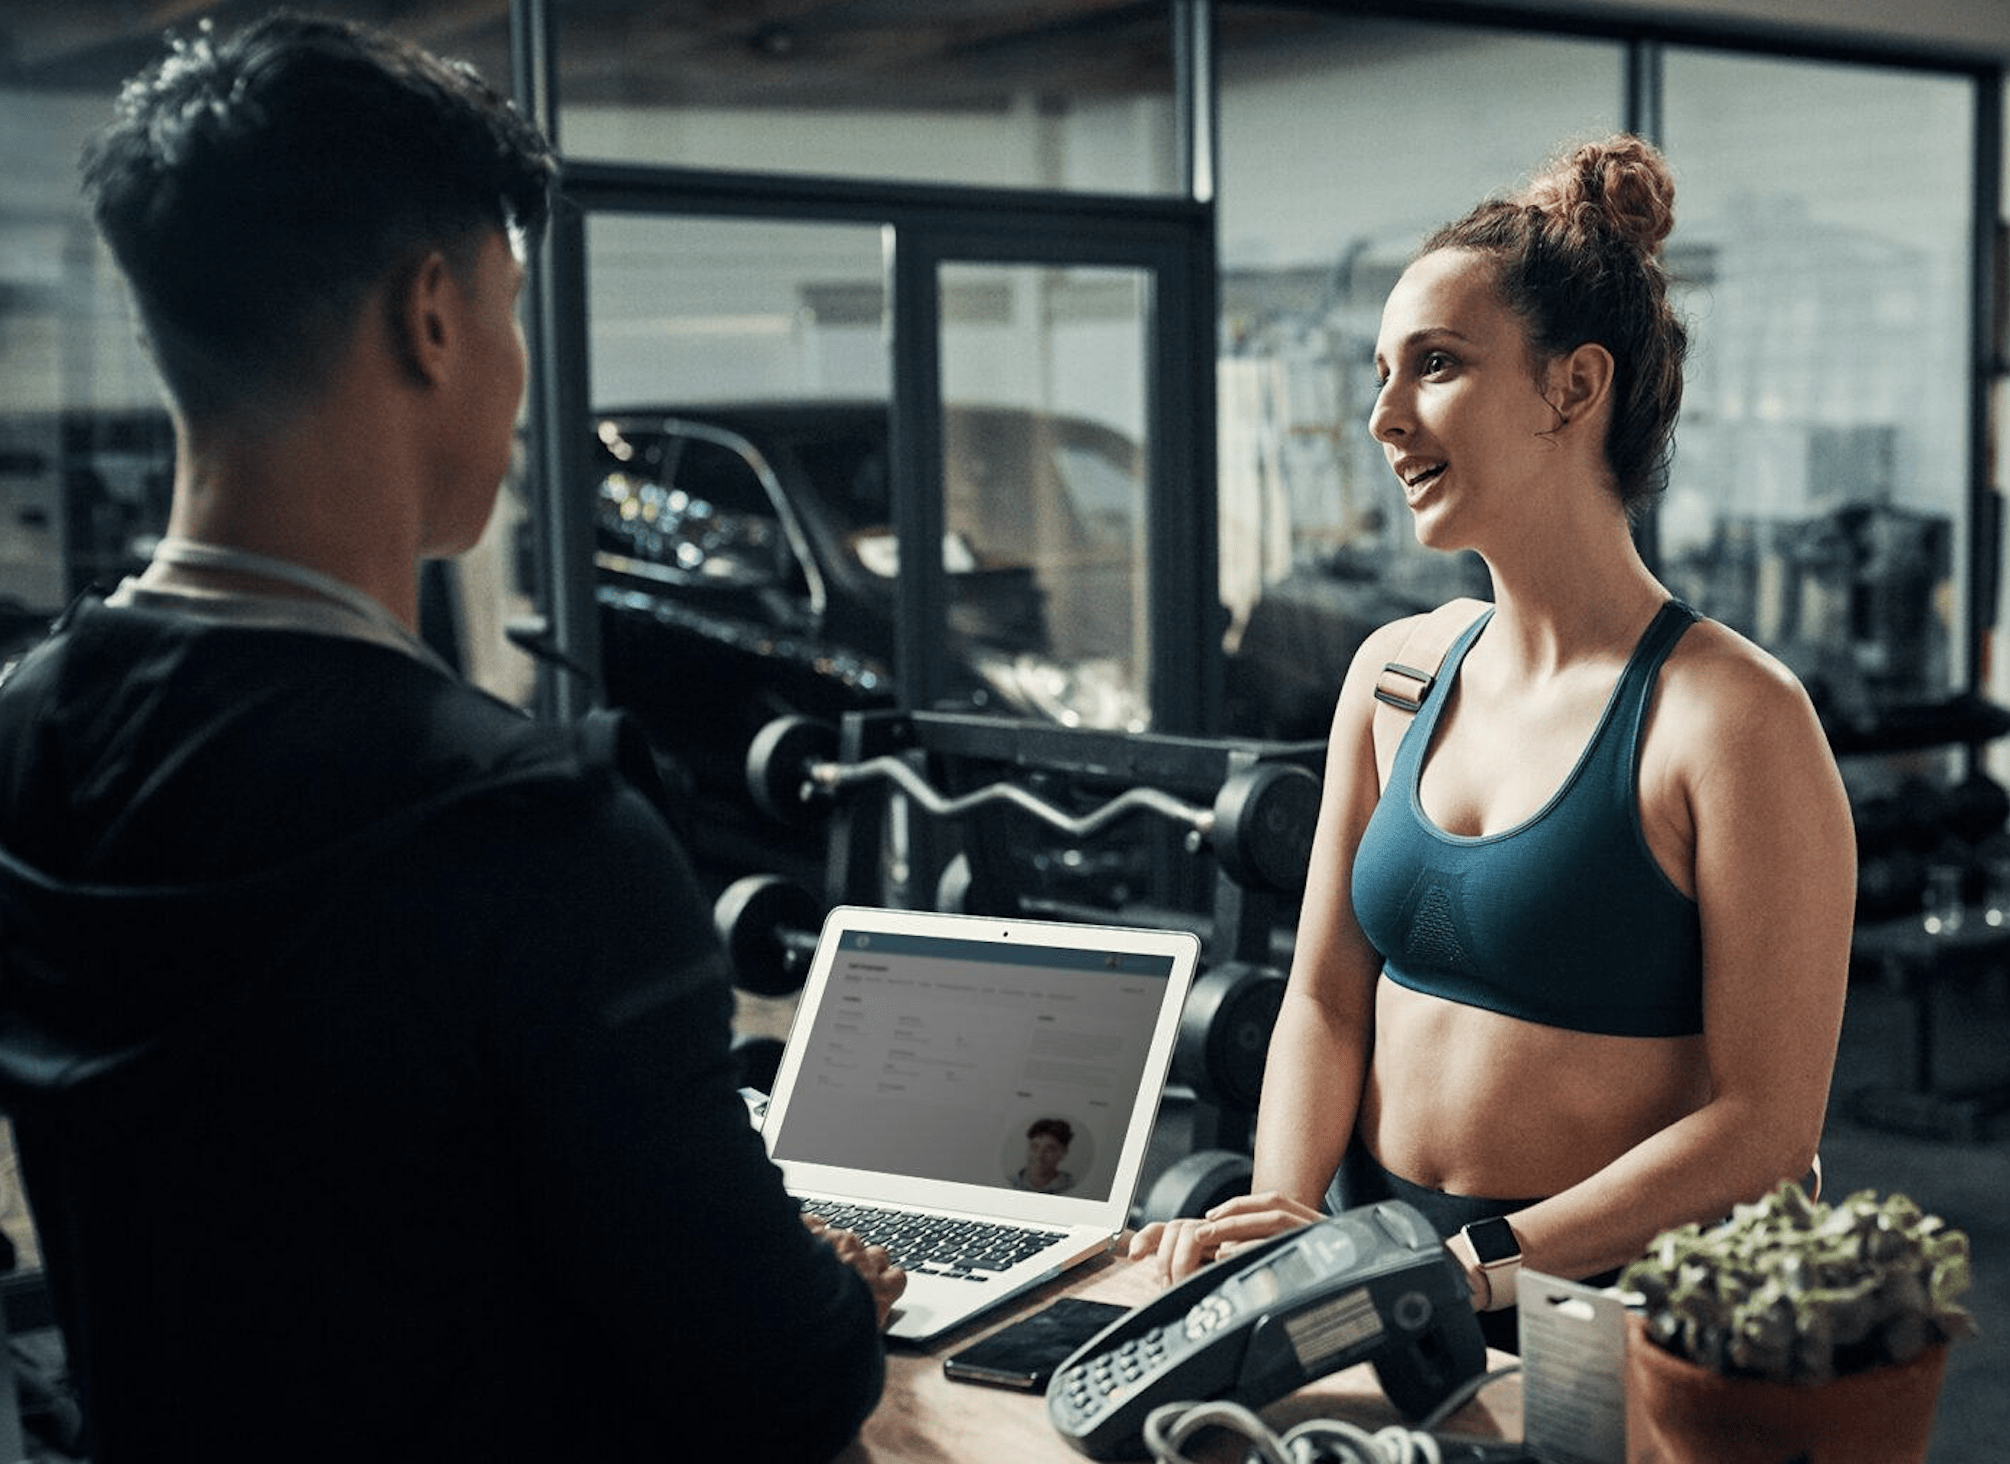 gyms-health-clubs-full